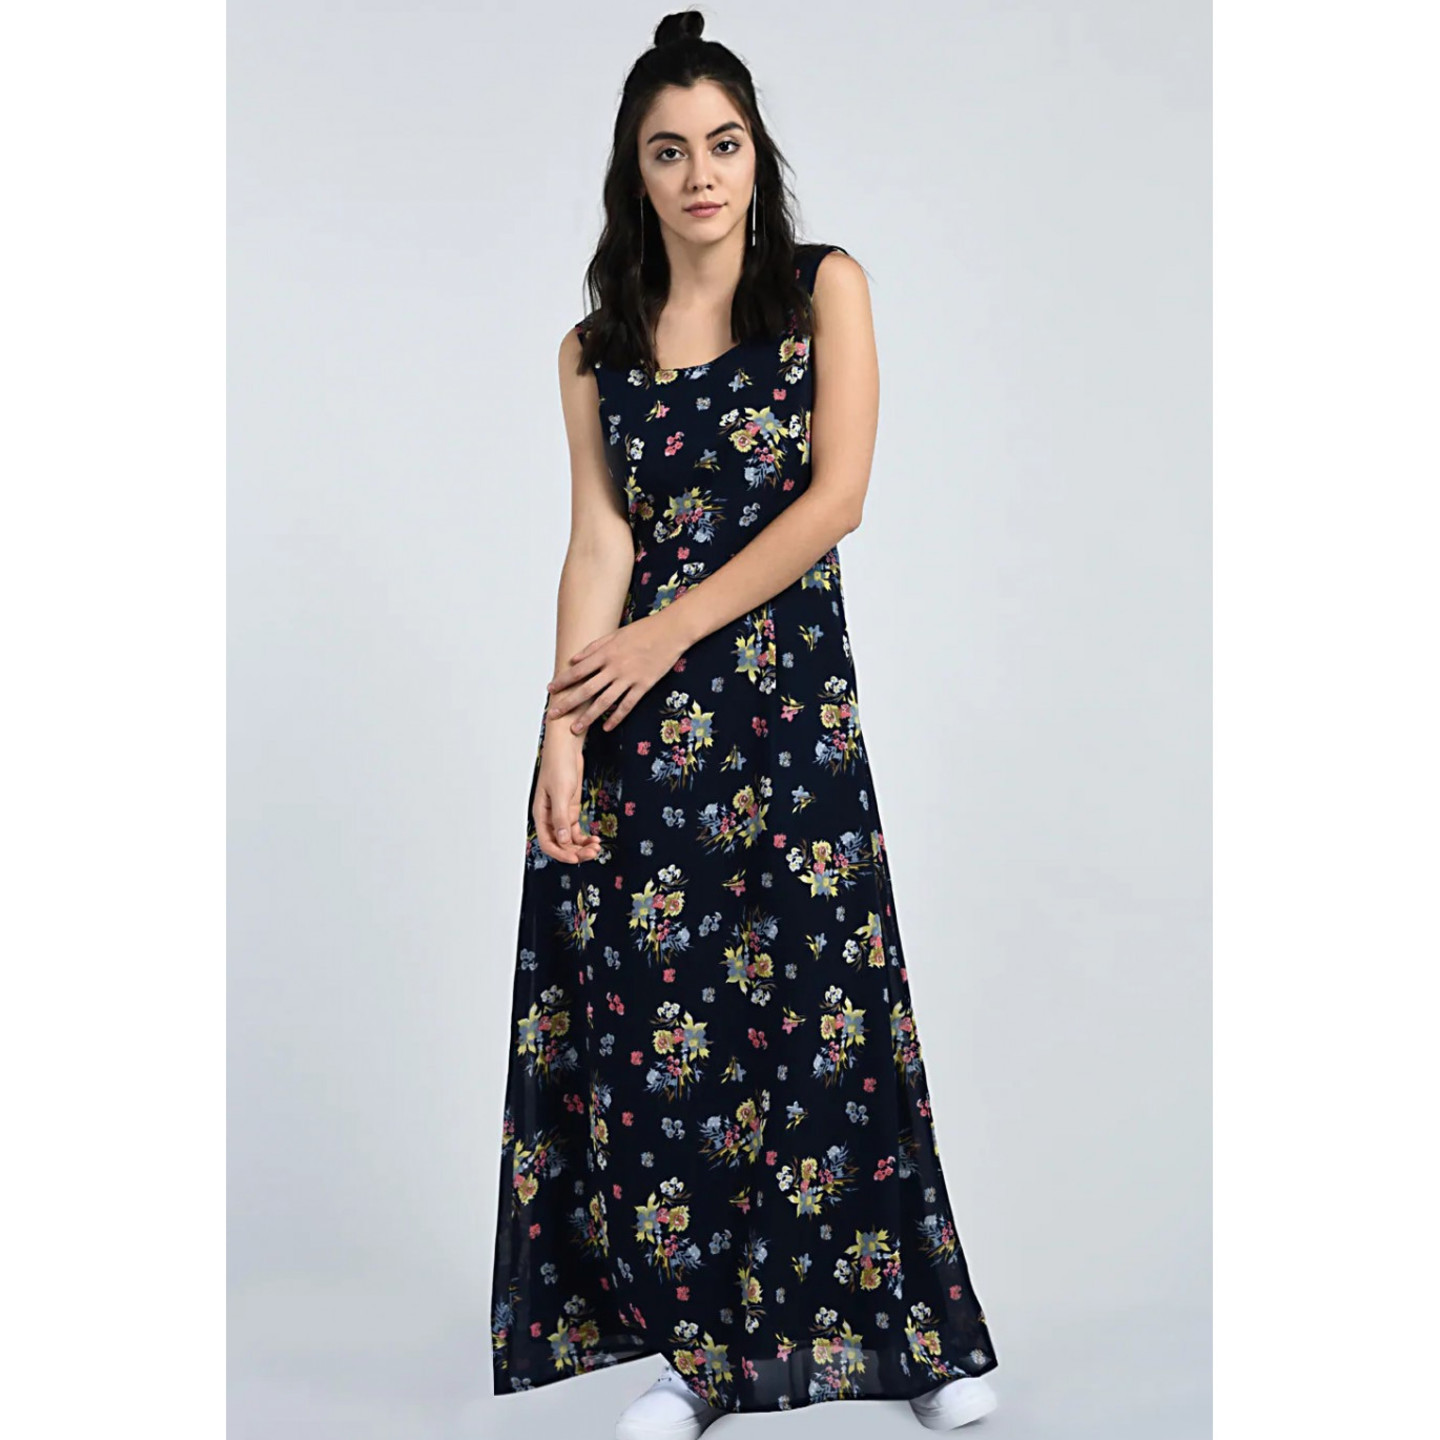 Paretto Black Printed Floral Maxi Dress for Women